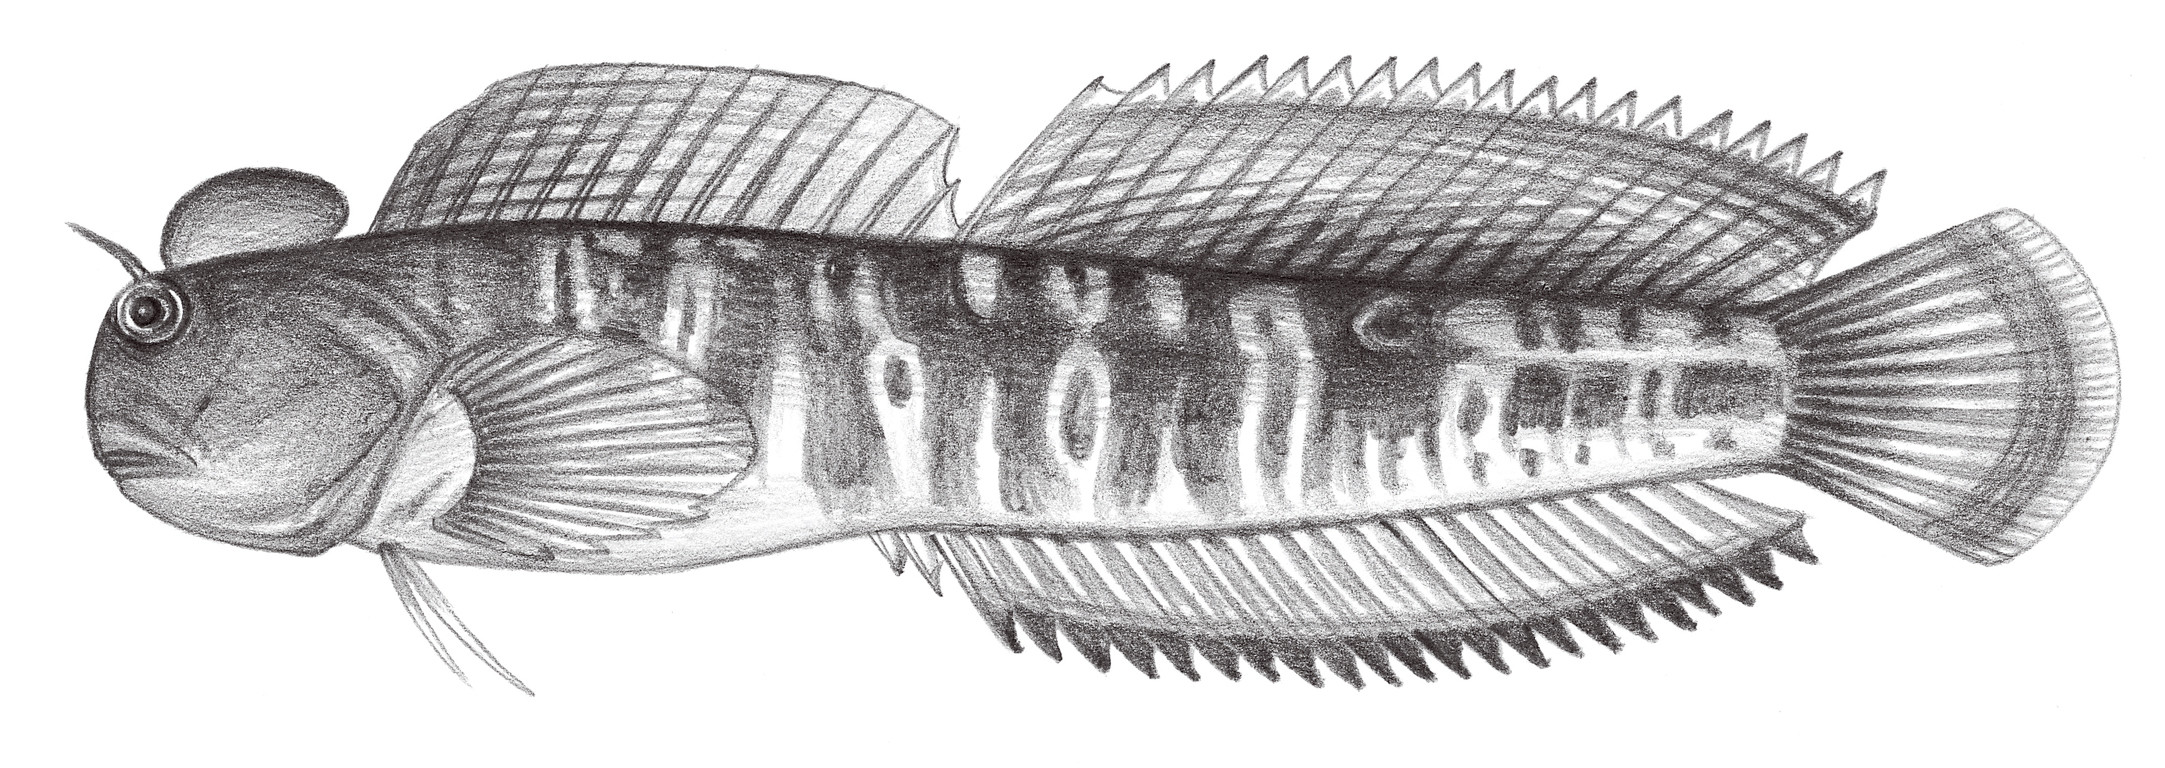 1972.	杜氏蛙鳚 Istiblennius dussumieri (Valenciennes, 1836)